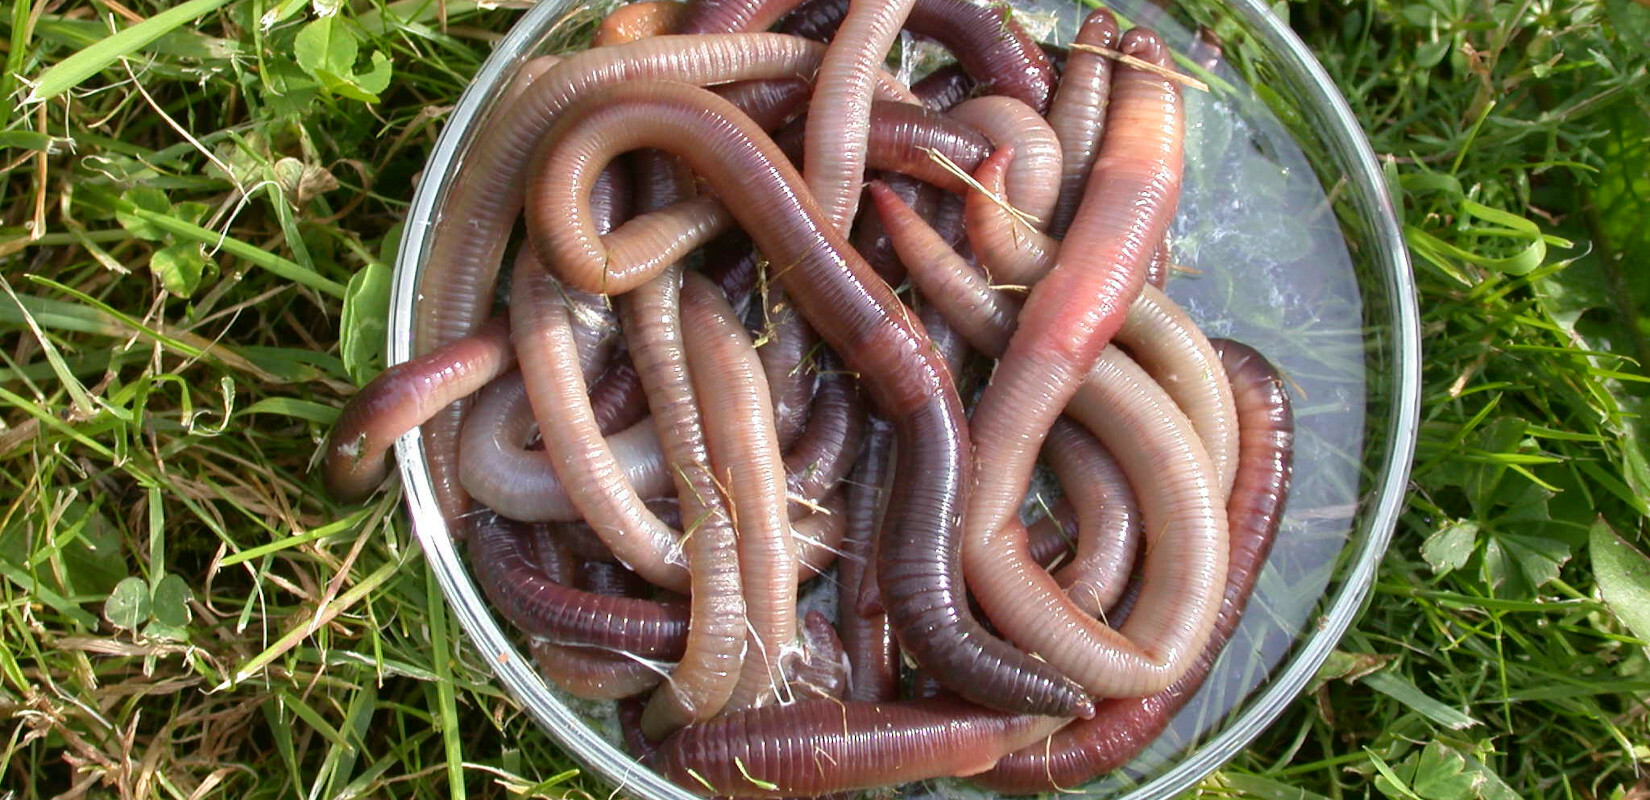 Earthworms (Lumbricus terrestris) in a Petri dish